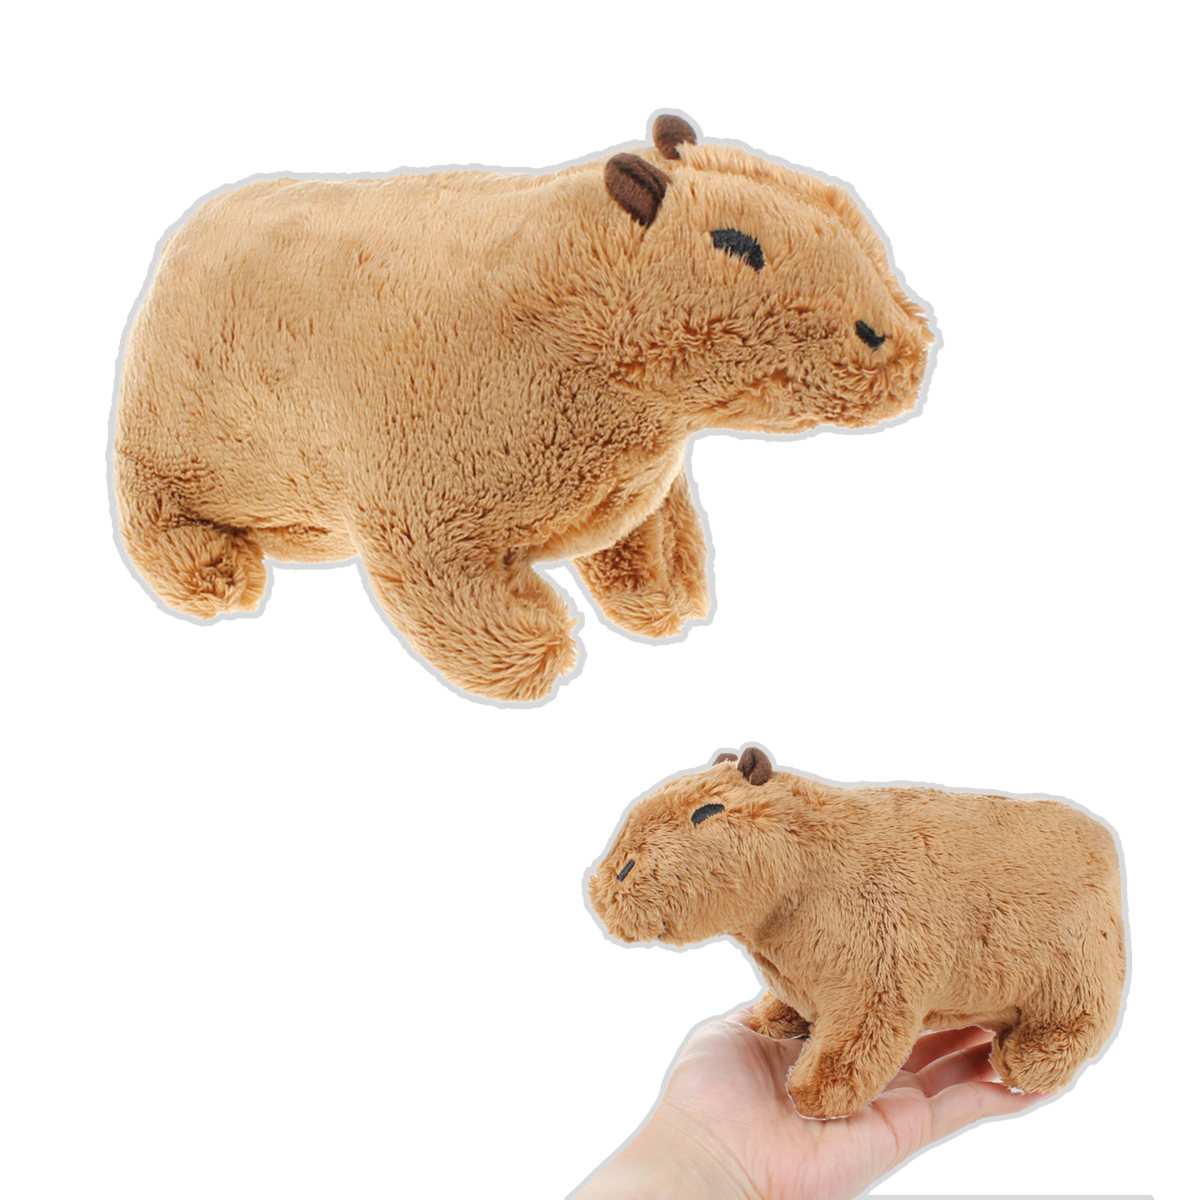 Capybara Soft Toy - Capybara Soft Toy - Capybara - Capybara - Capybara Plush - 20cm